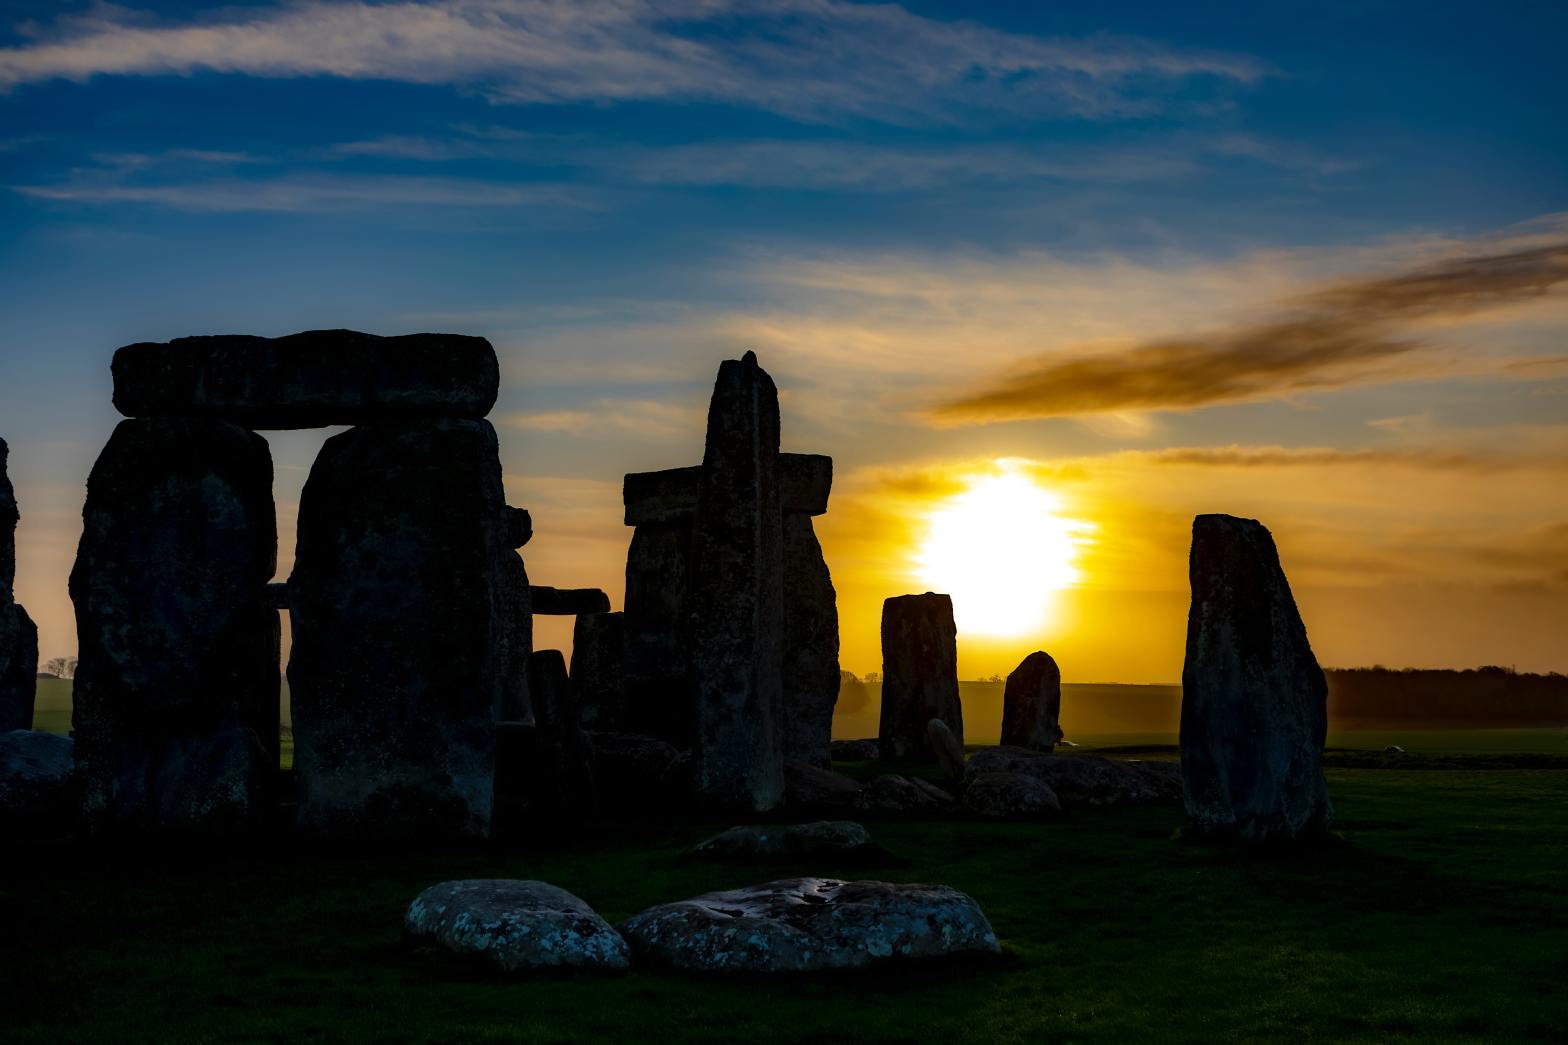 Winter solstice, Stonehenge at dusk